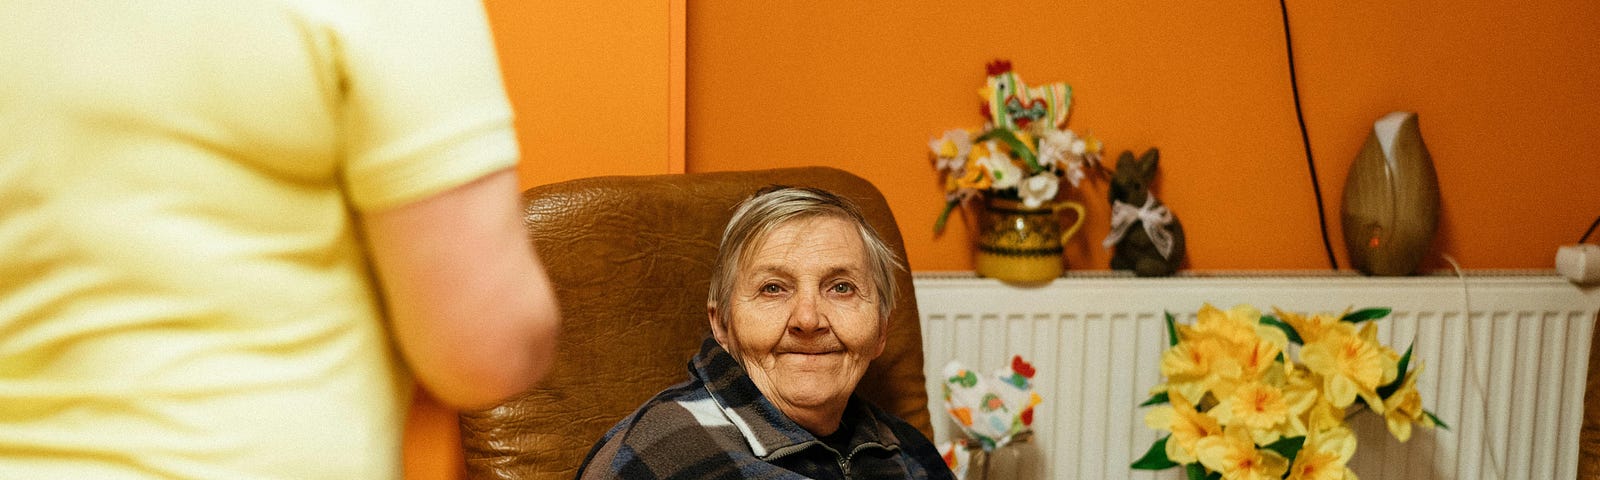 Older person in nursing home